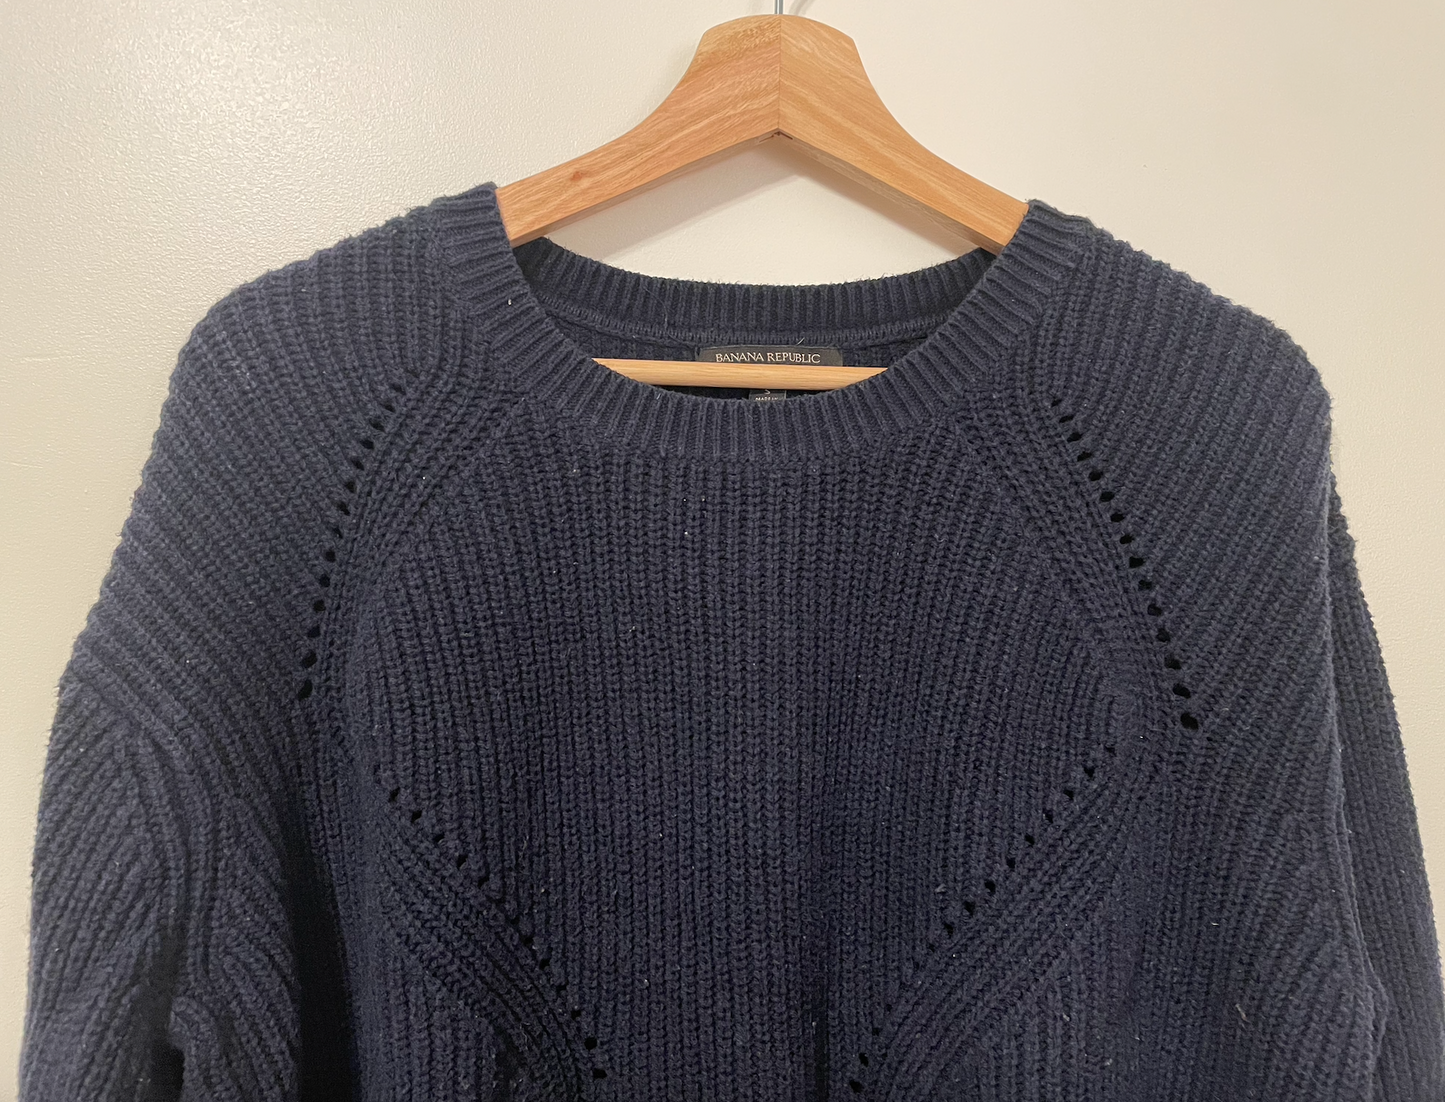 Banana Republic navy blue oversized sweater - women's size small - EUC